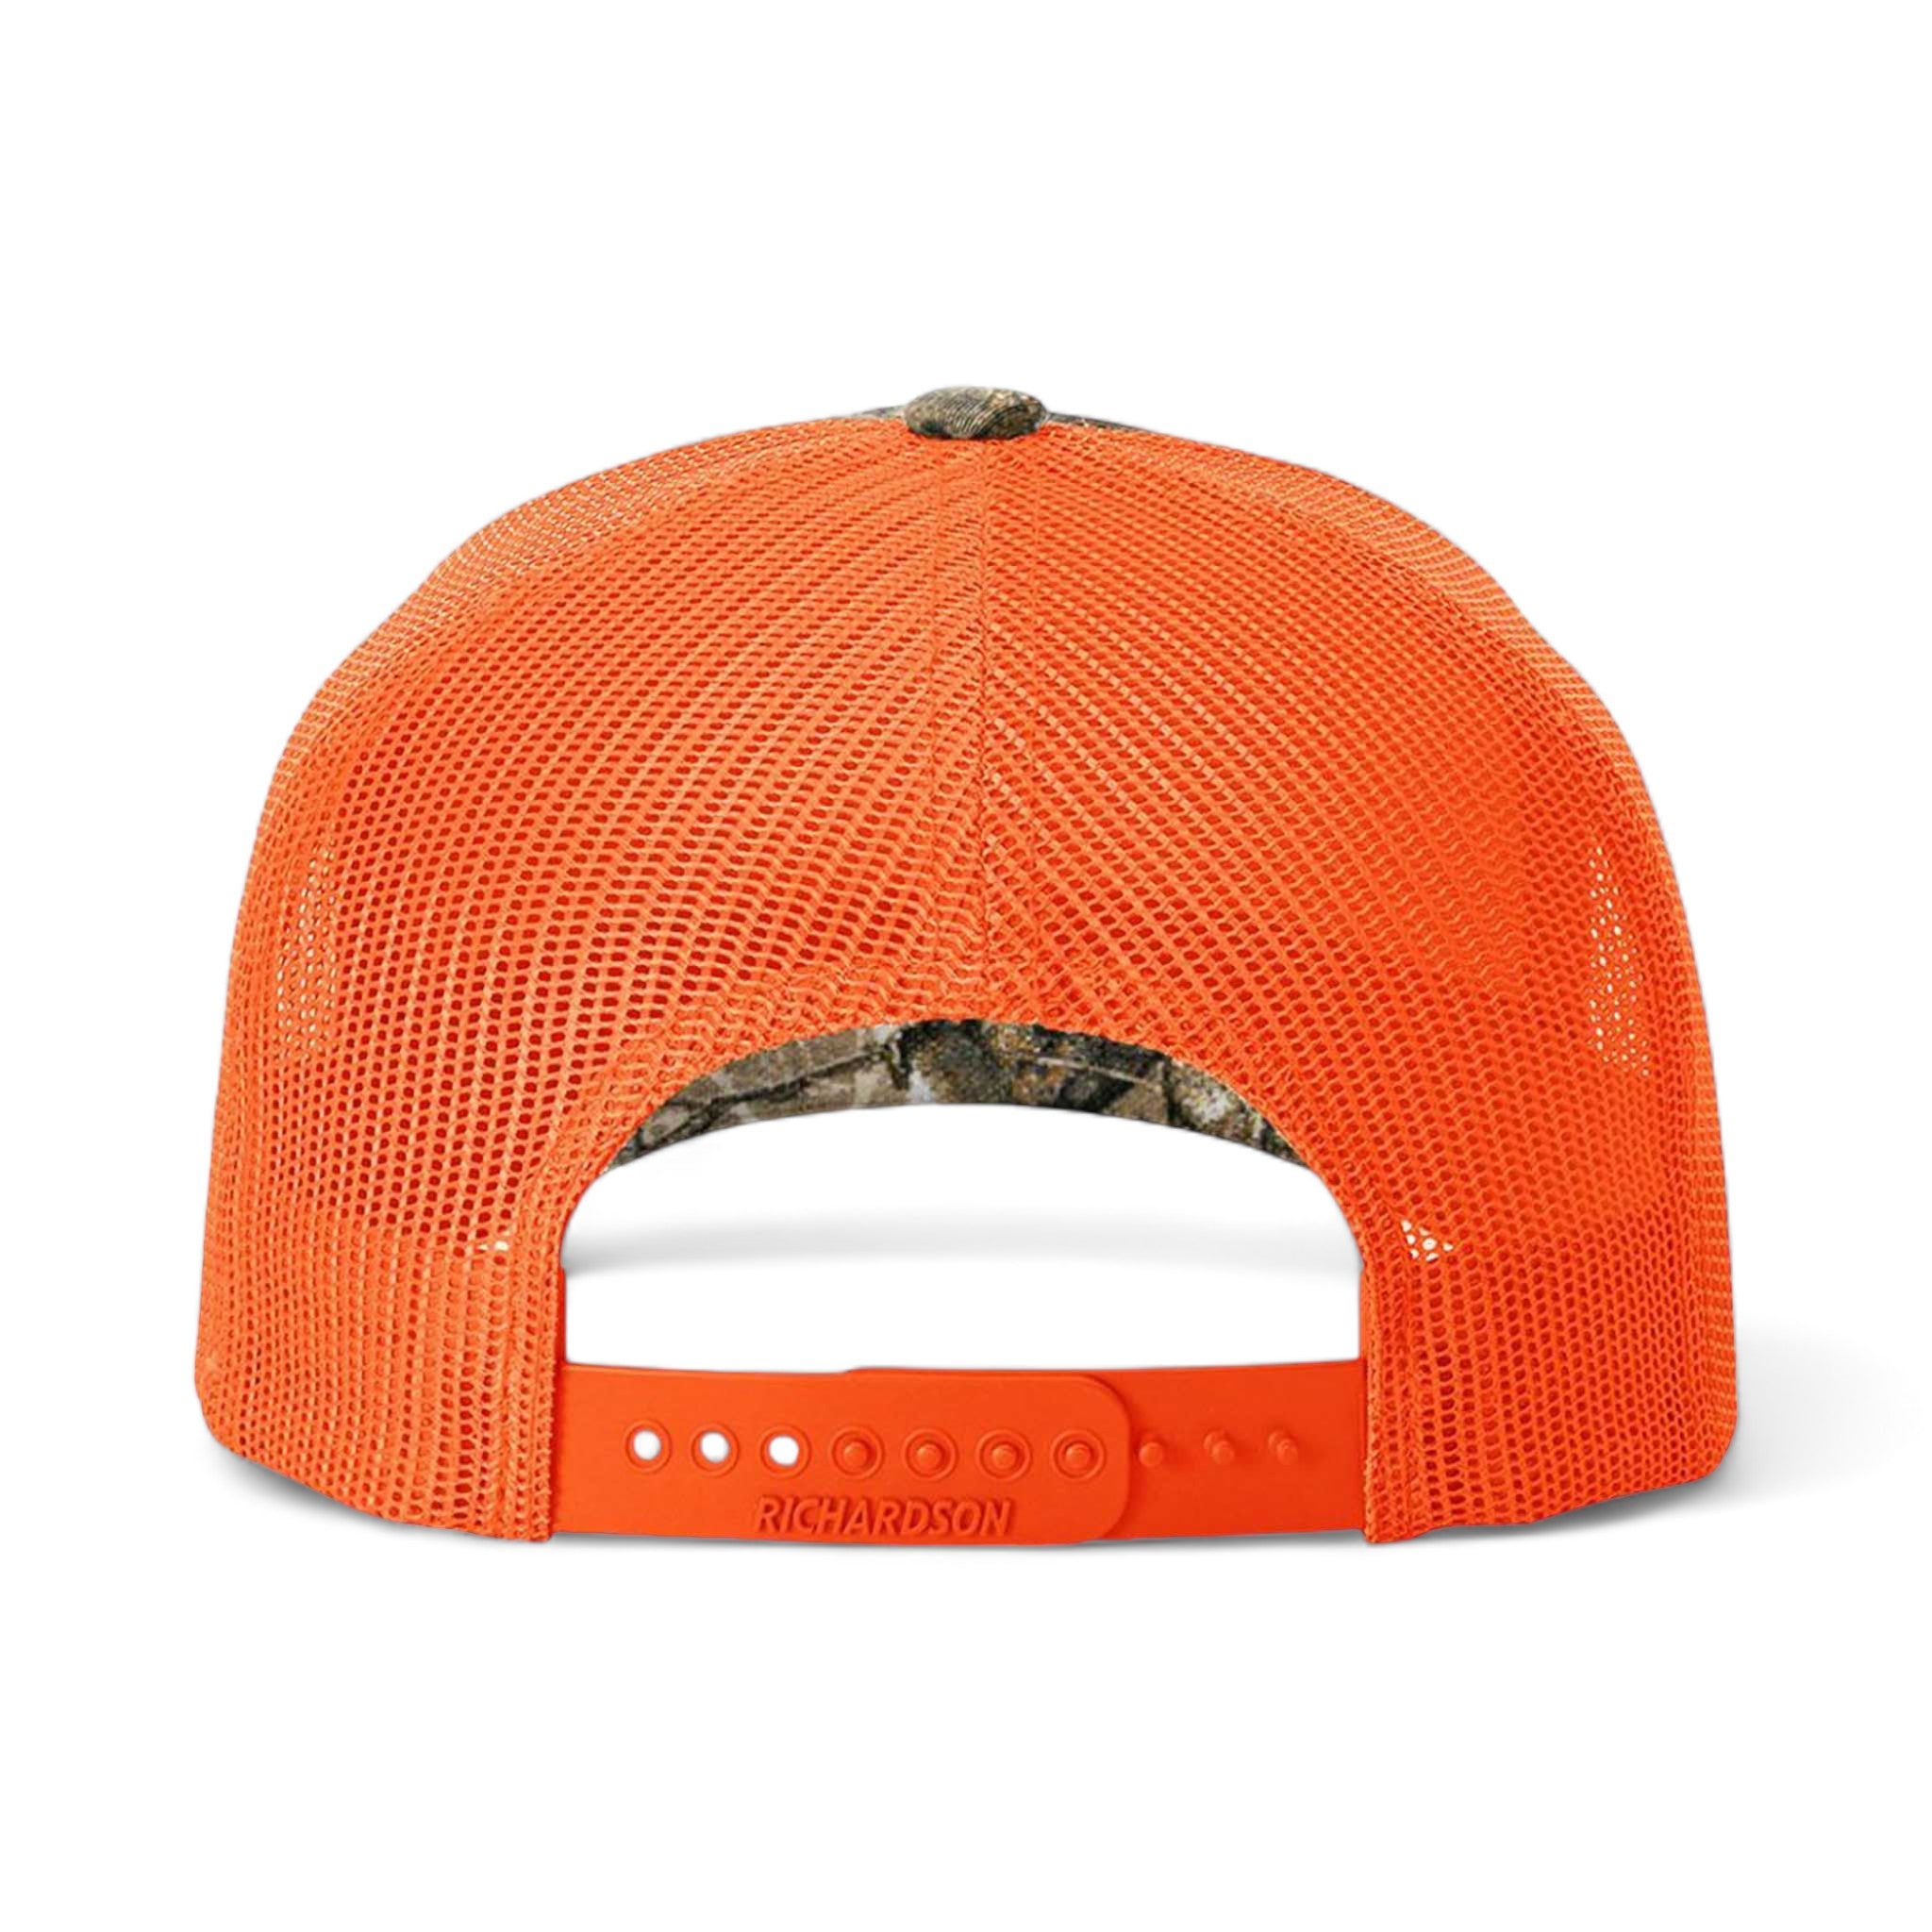 Back view of Richardson 112PFP custom hat in realtree edge and neon orange